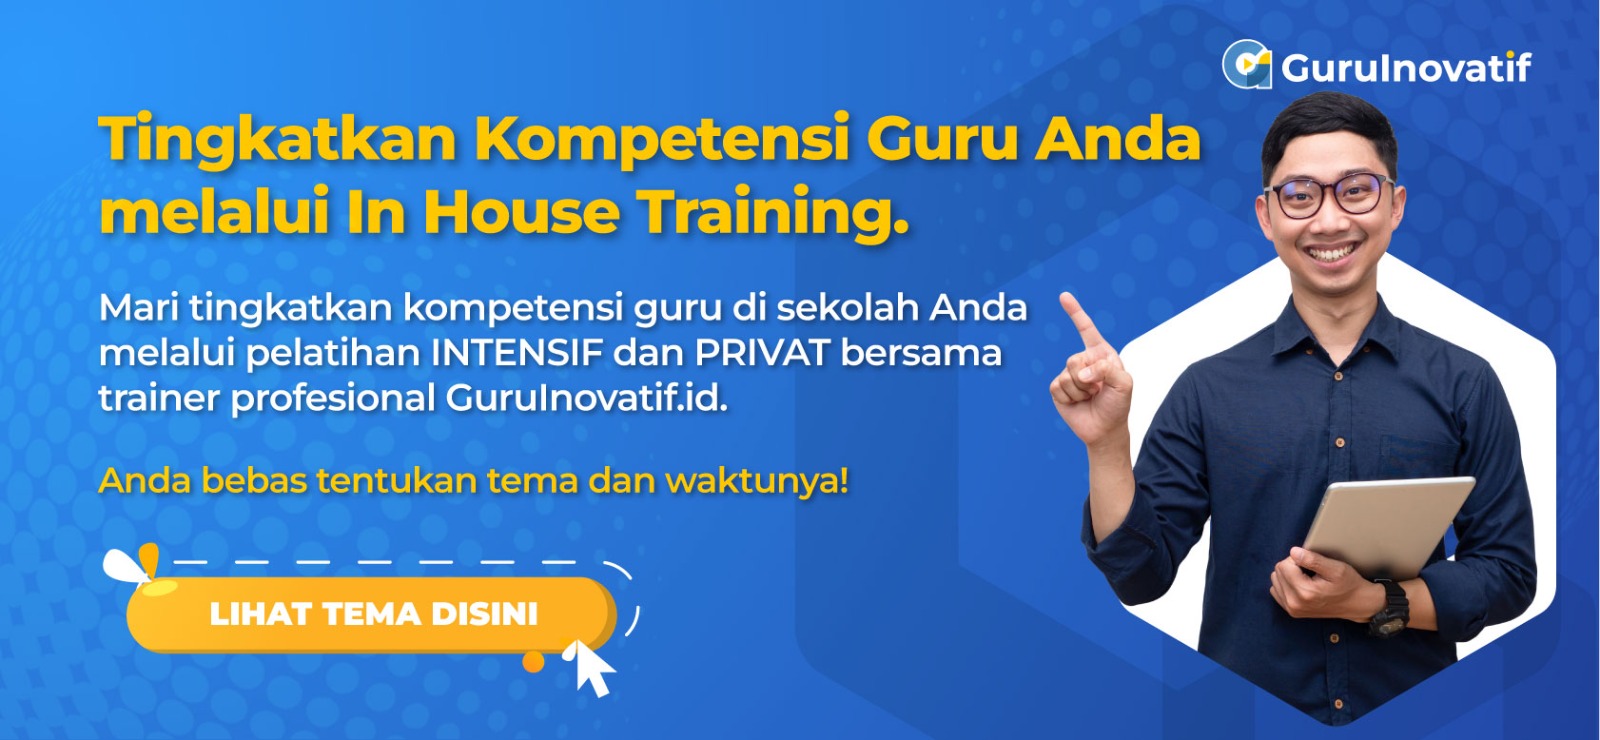 In House Training GuruInovatif.id